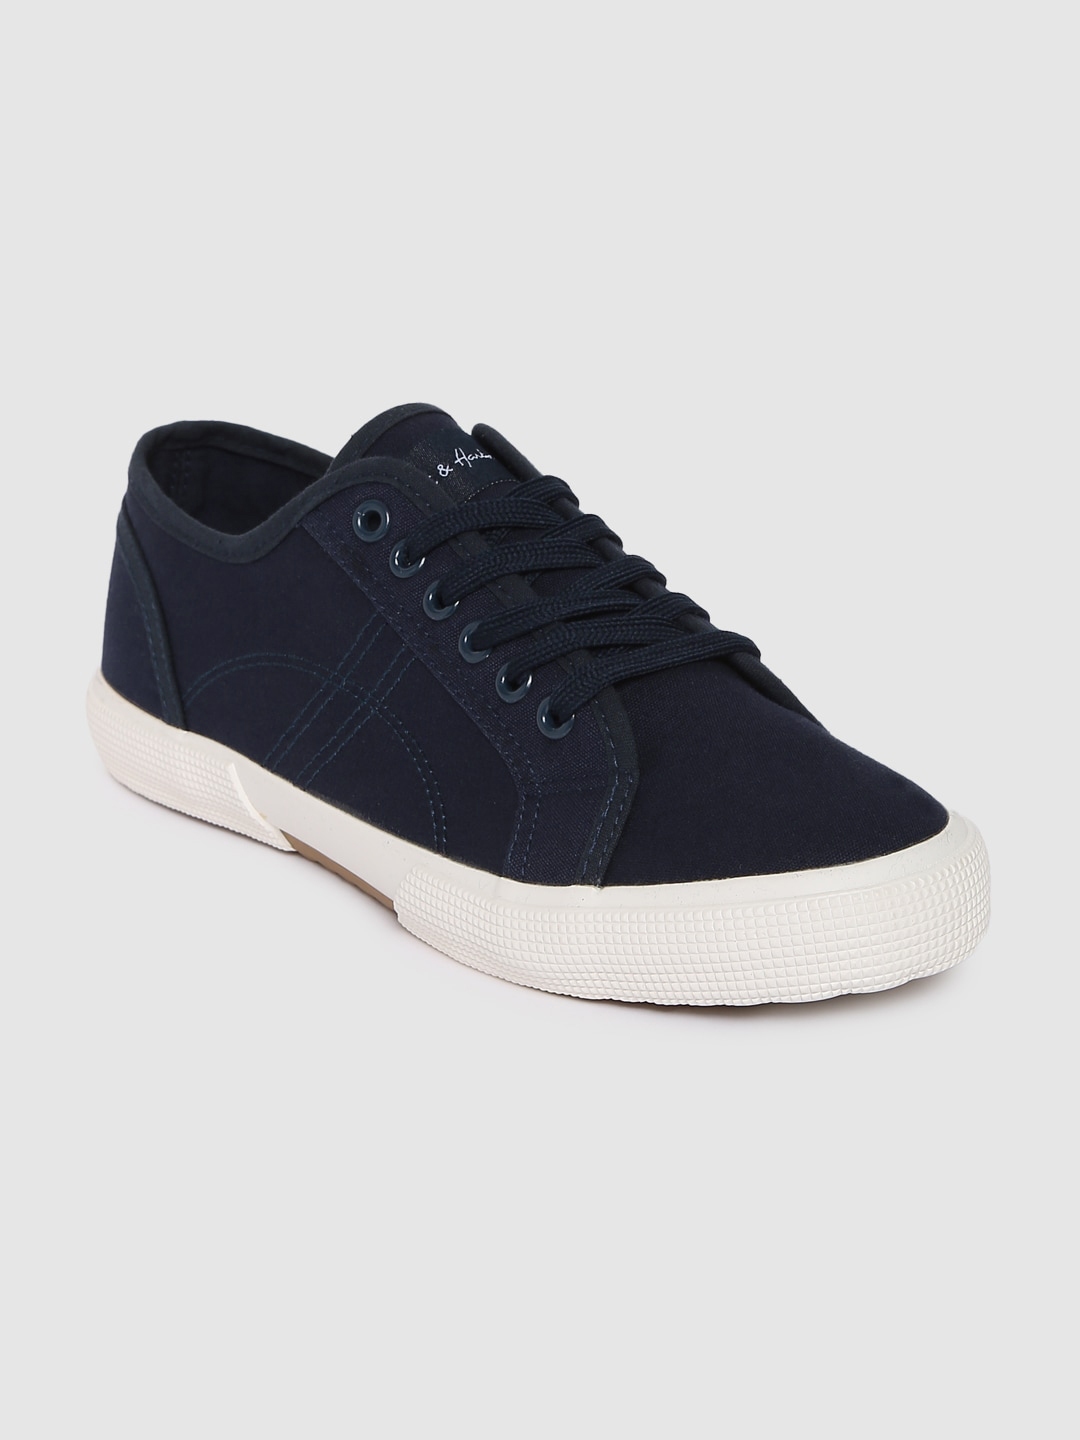 Buy Mast & Harbour Men Navy Blue Sneakers - Casual Shoes for Men ...